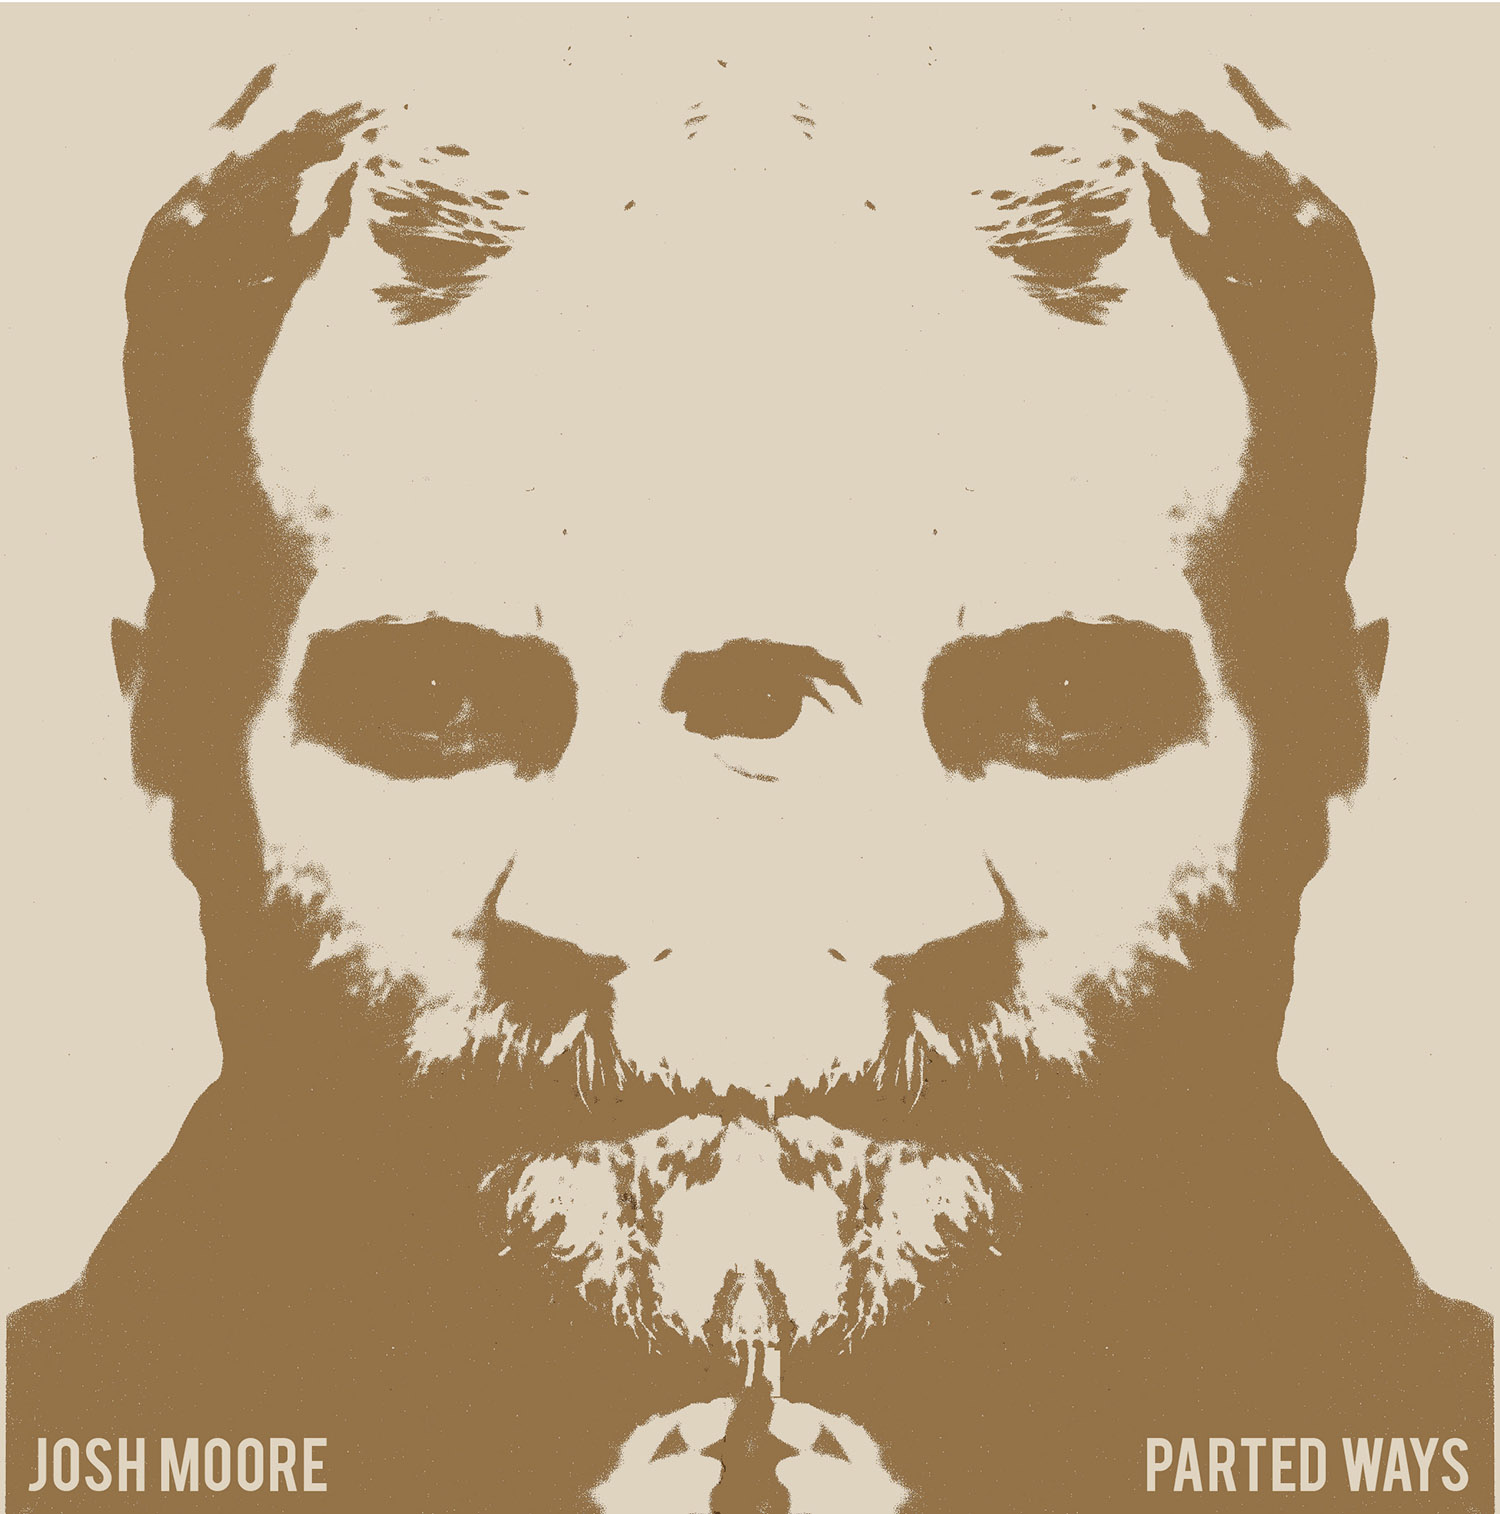 Josh Moore "Parted Ways"